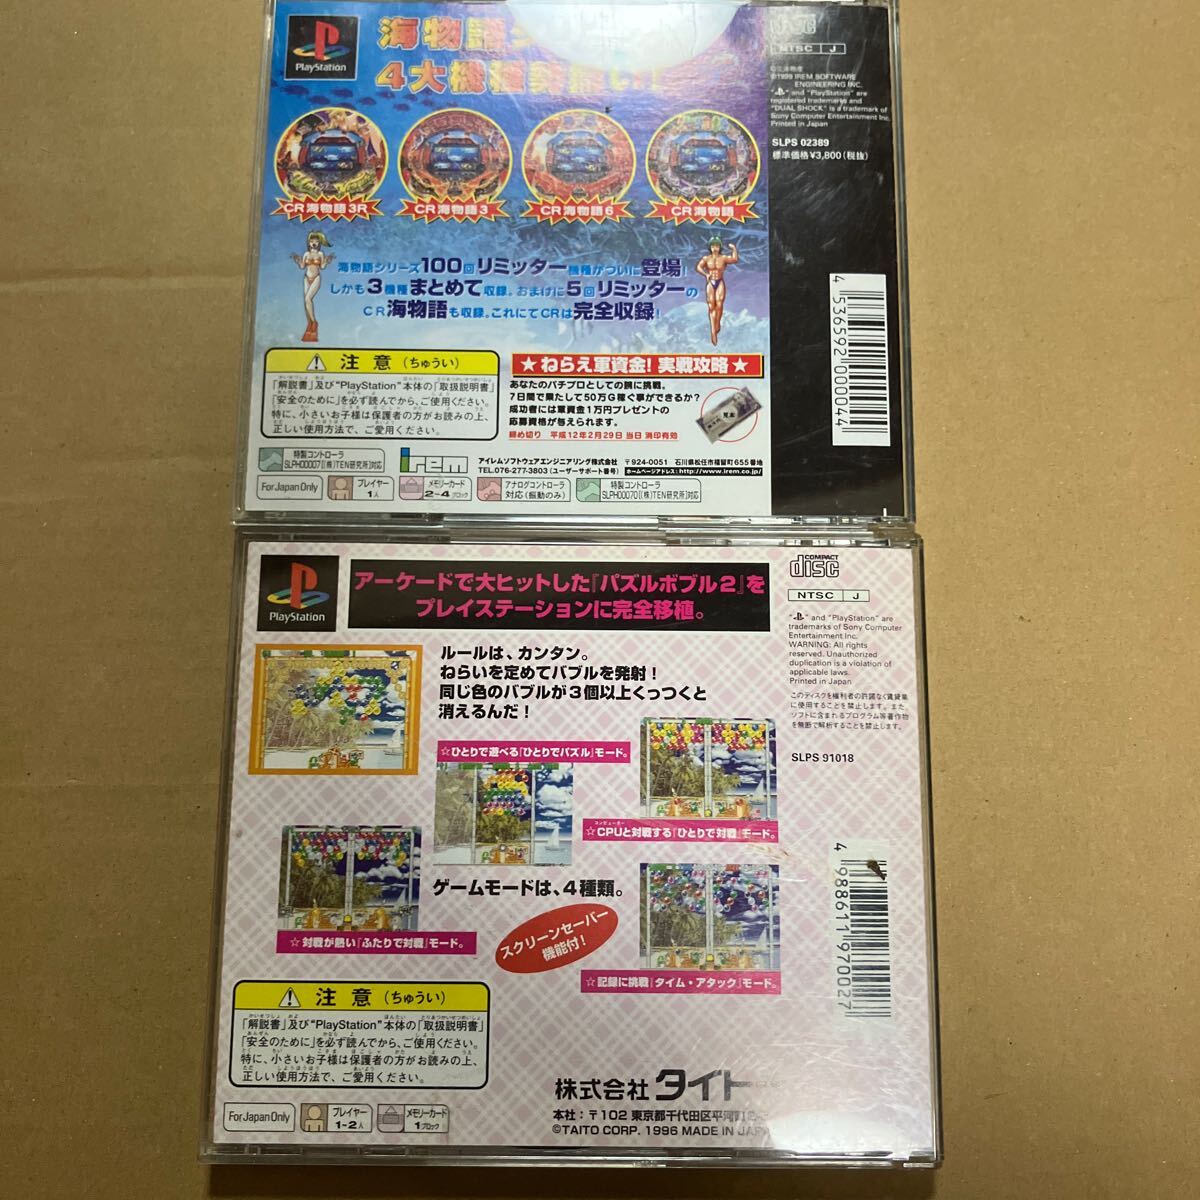  PlayStation soft Sanyo pachinko pala dice sea monogatari 2, puzzle Bob ru2